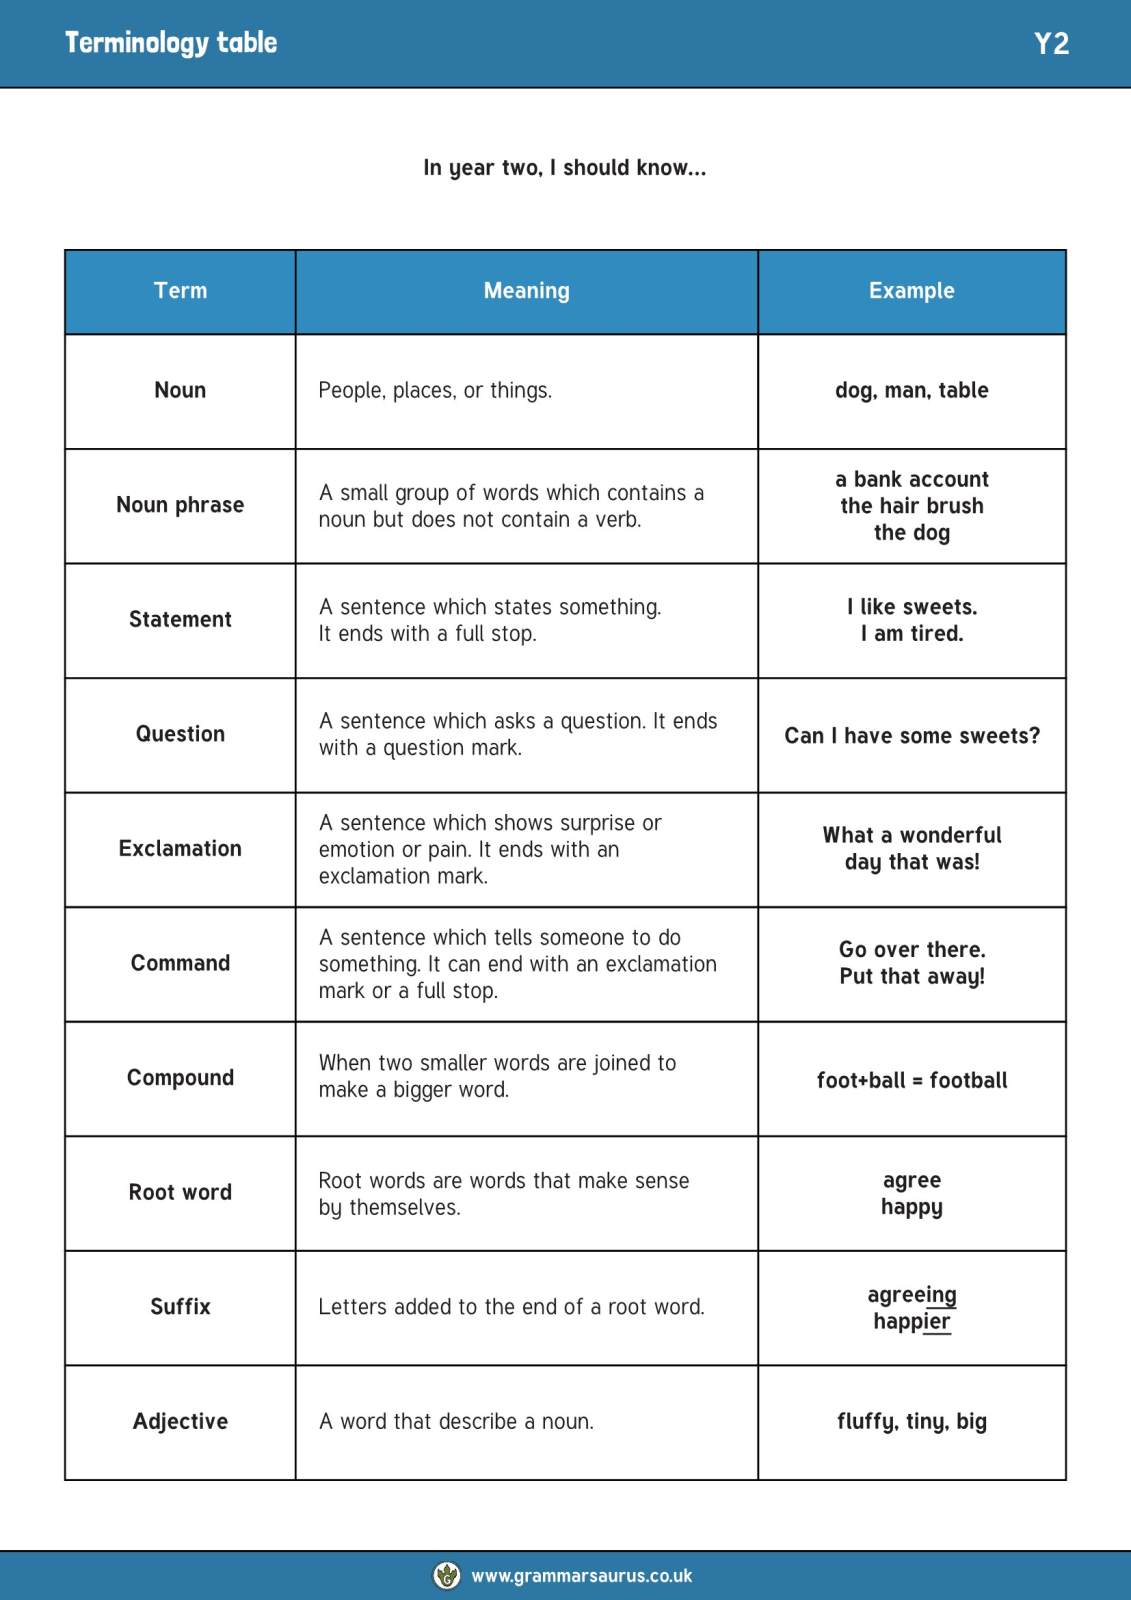 Grammar terminology table Yr2